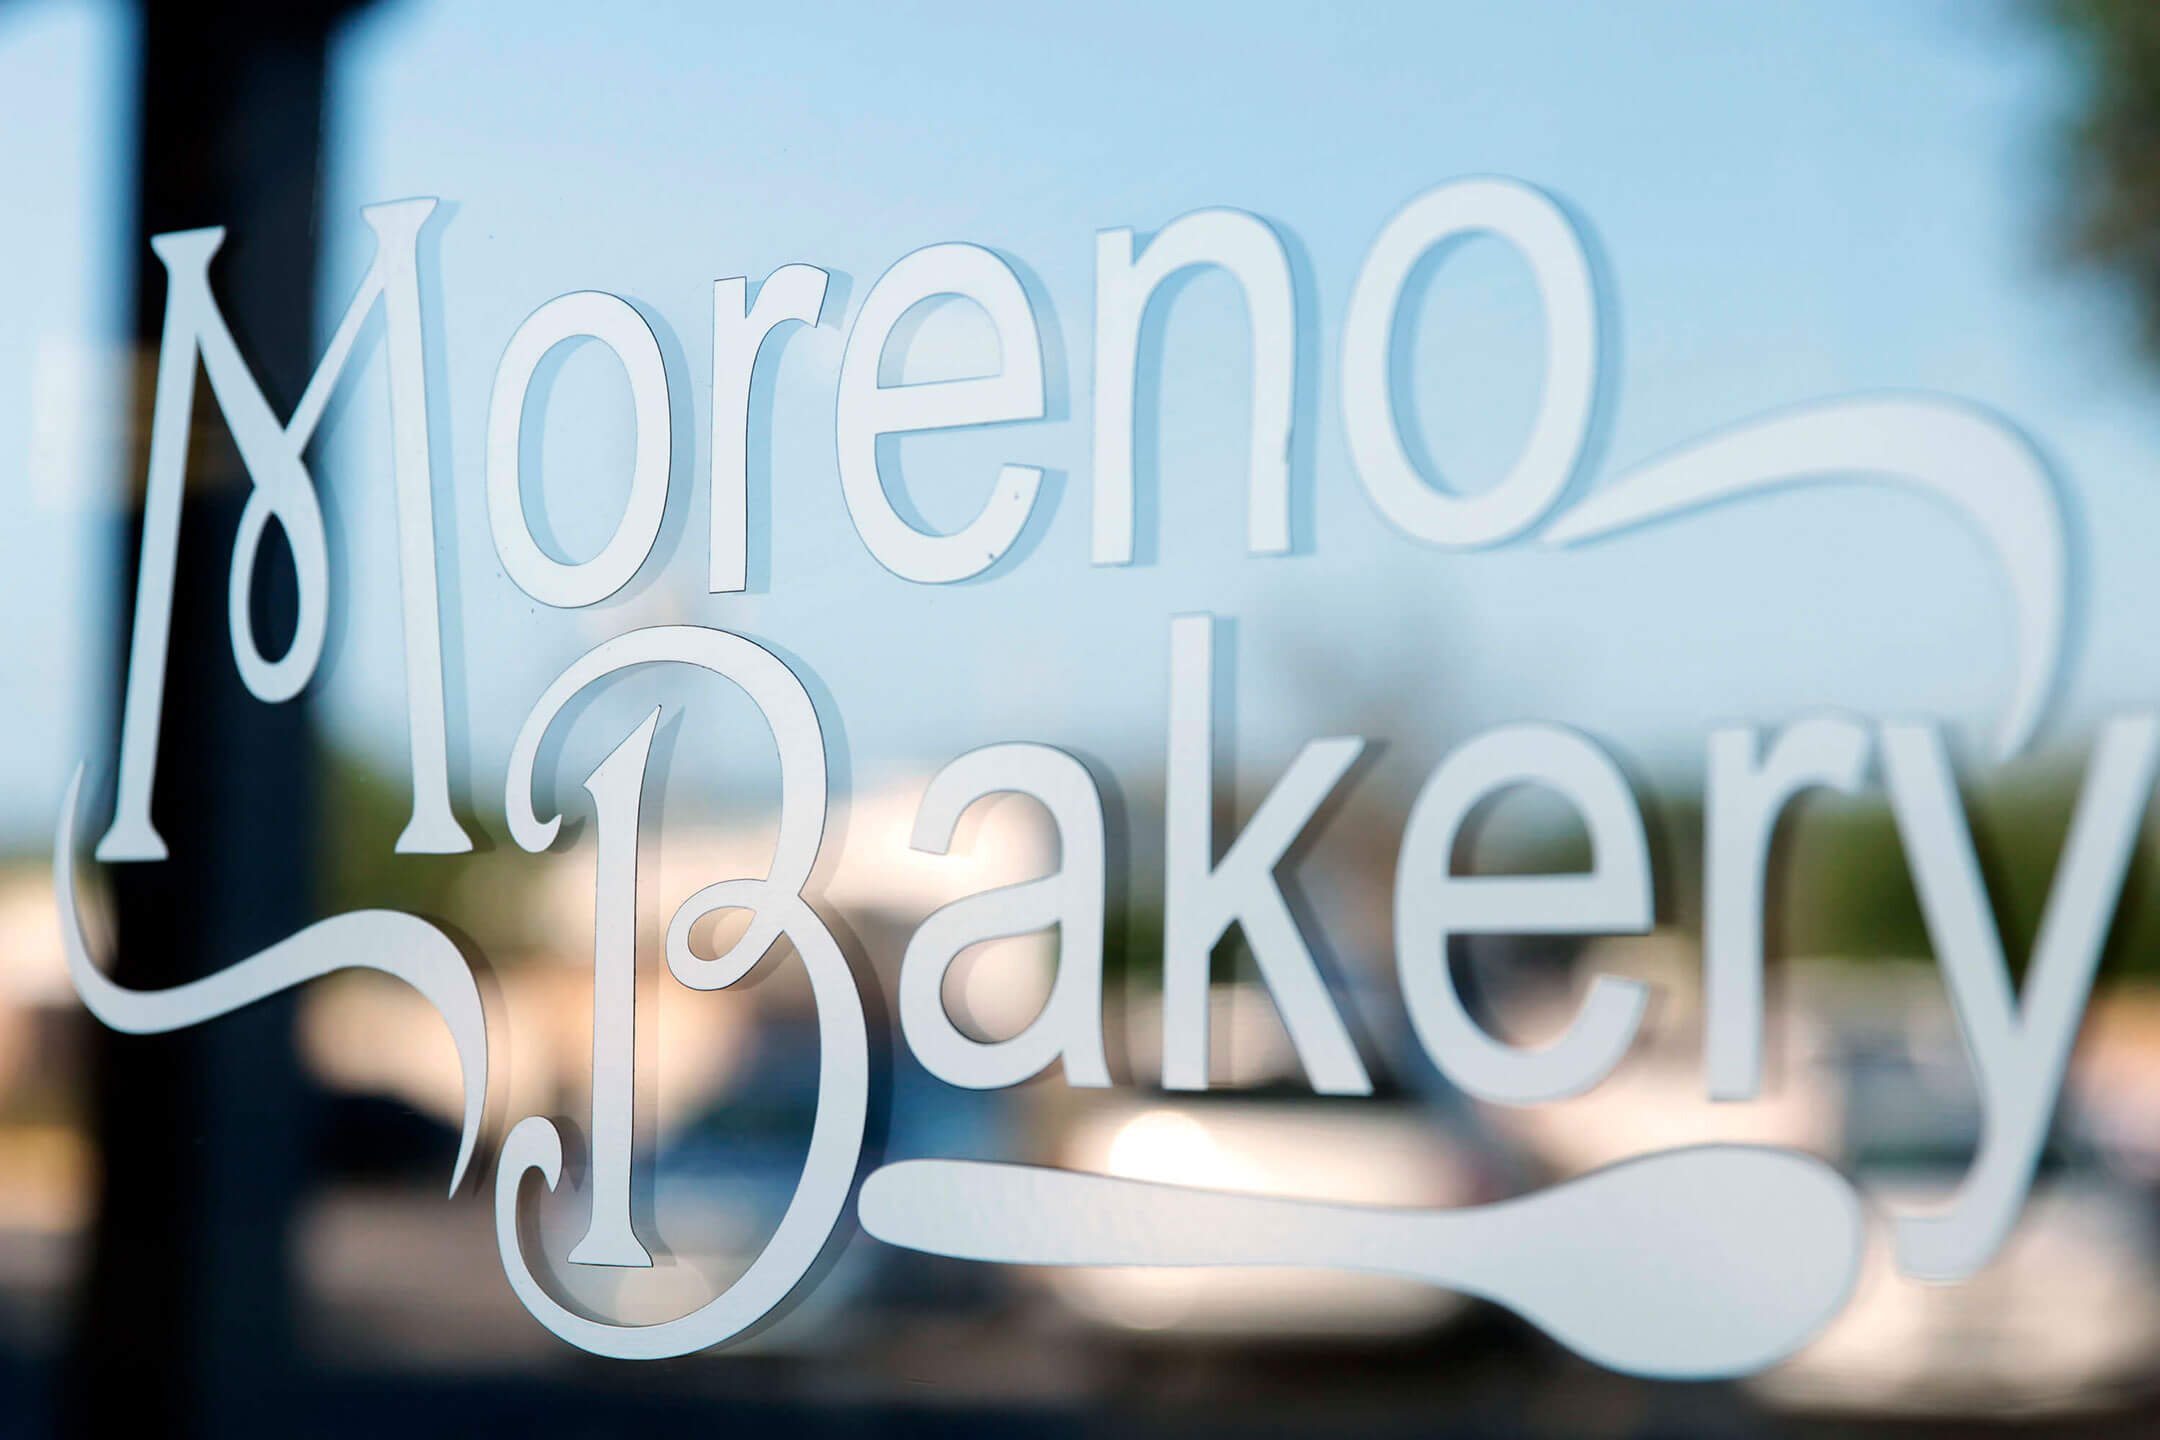 Moreno Bakery Sign